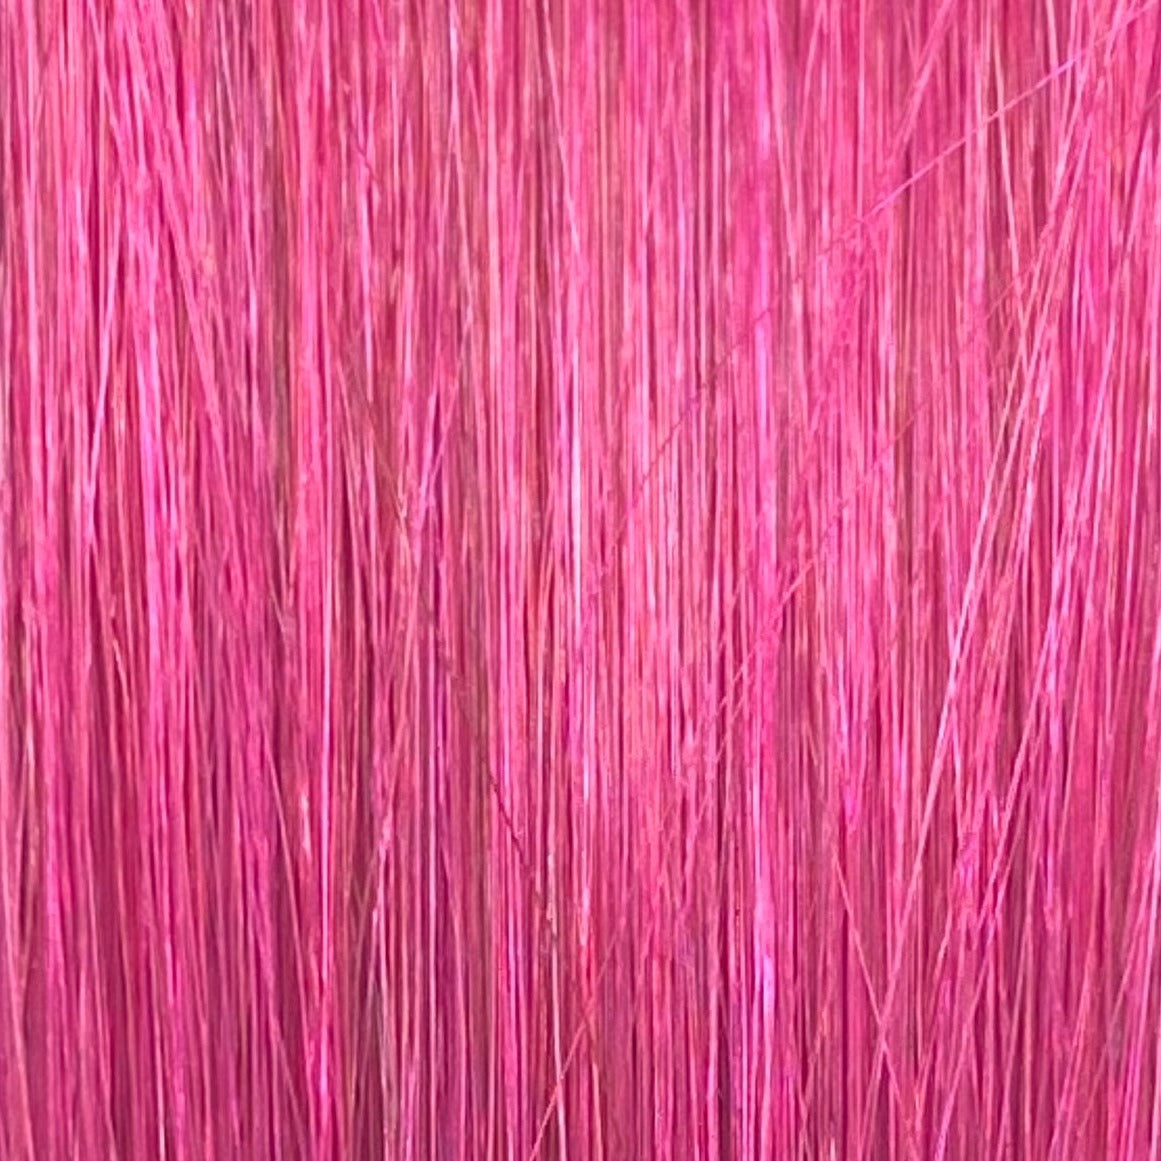 Fusion hair extensions #Fuchsia - Fantasy - 50cm/20 inches - Fuchsia Fusion Euro So Cap 